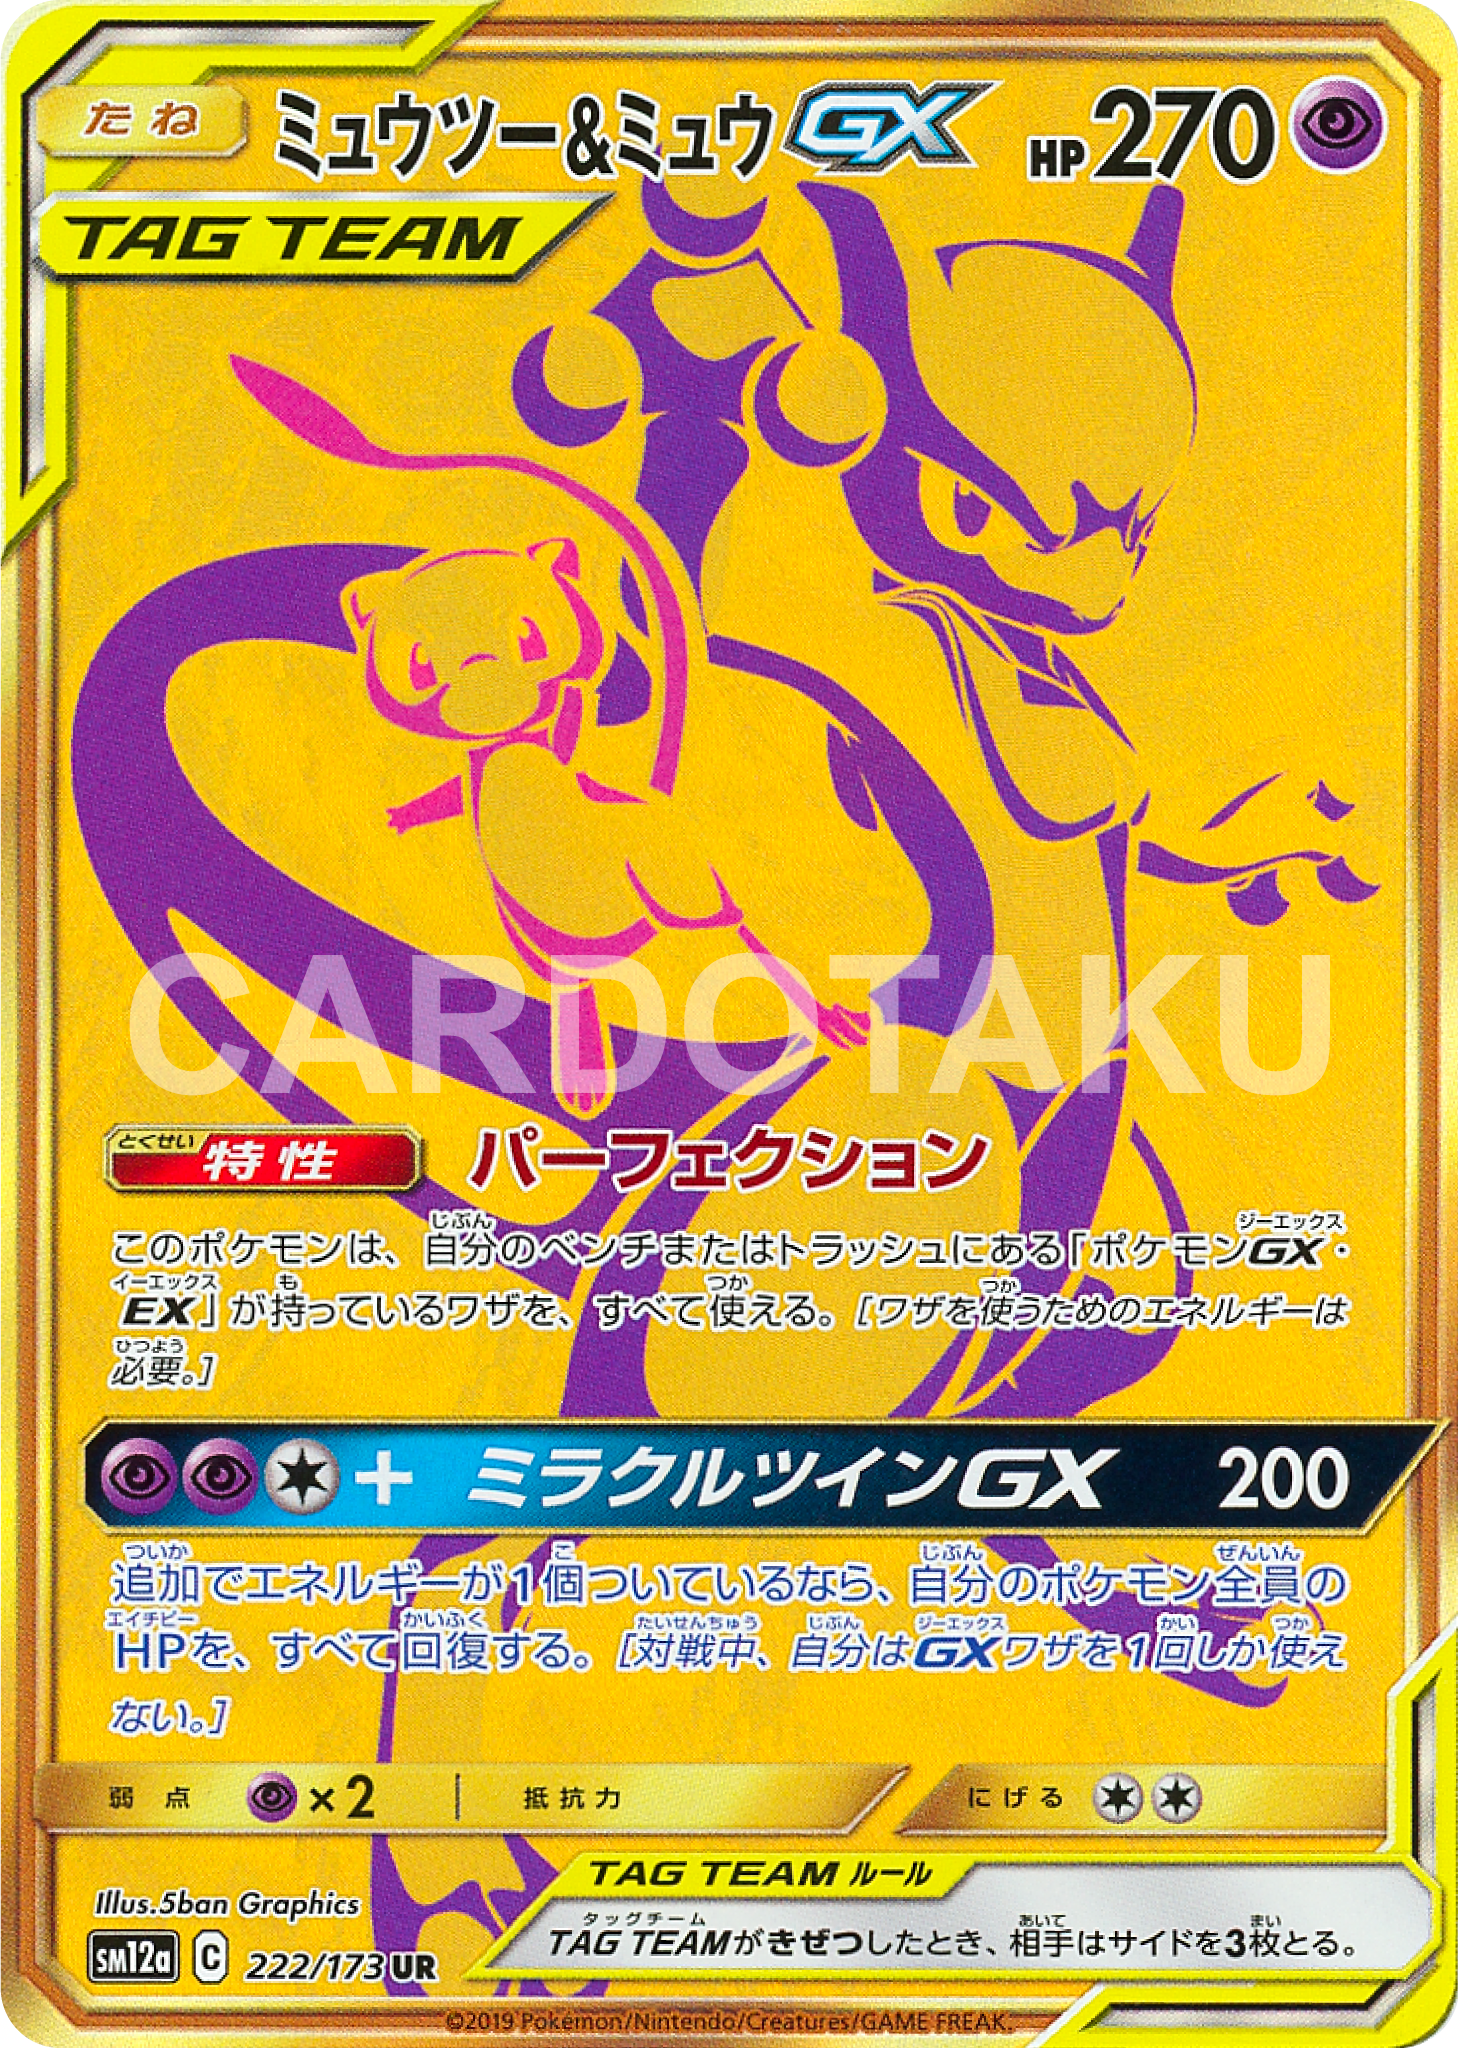 Pokémon Card Game SM12a 222/173 UR